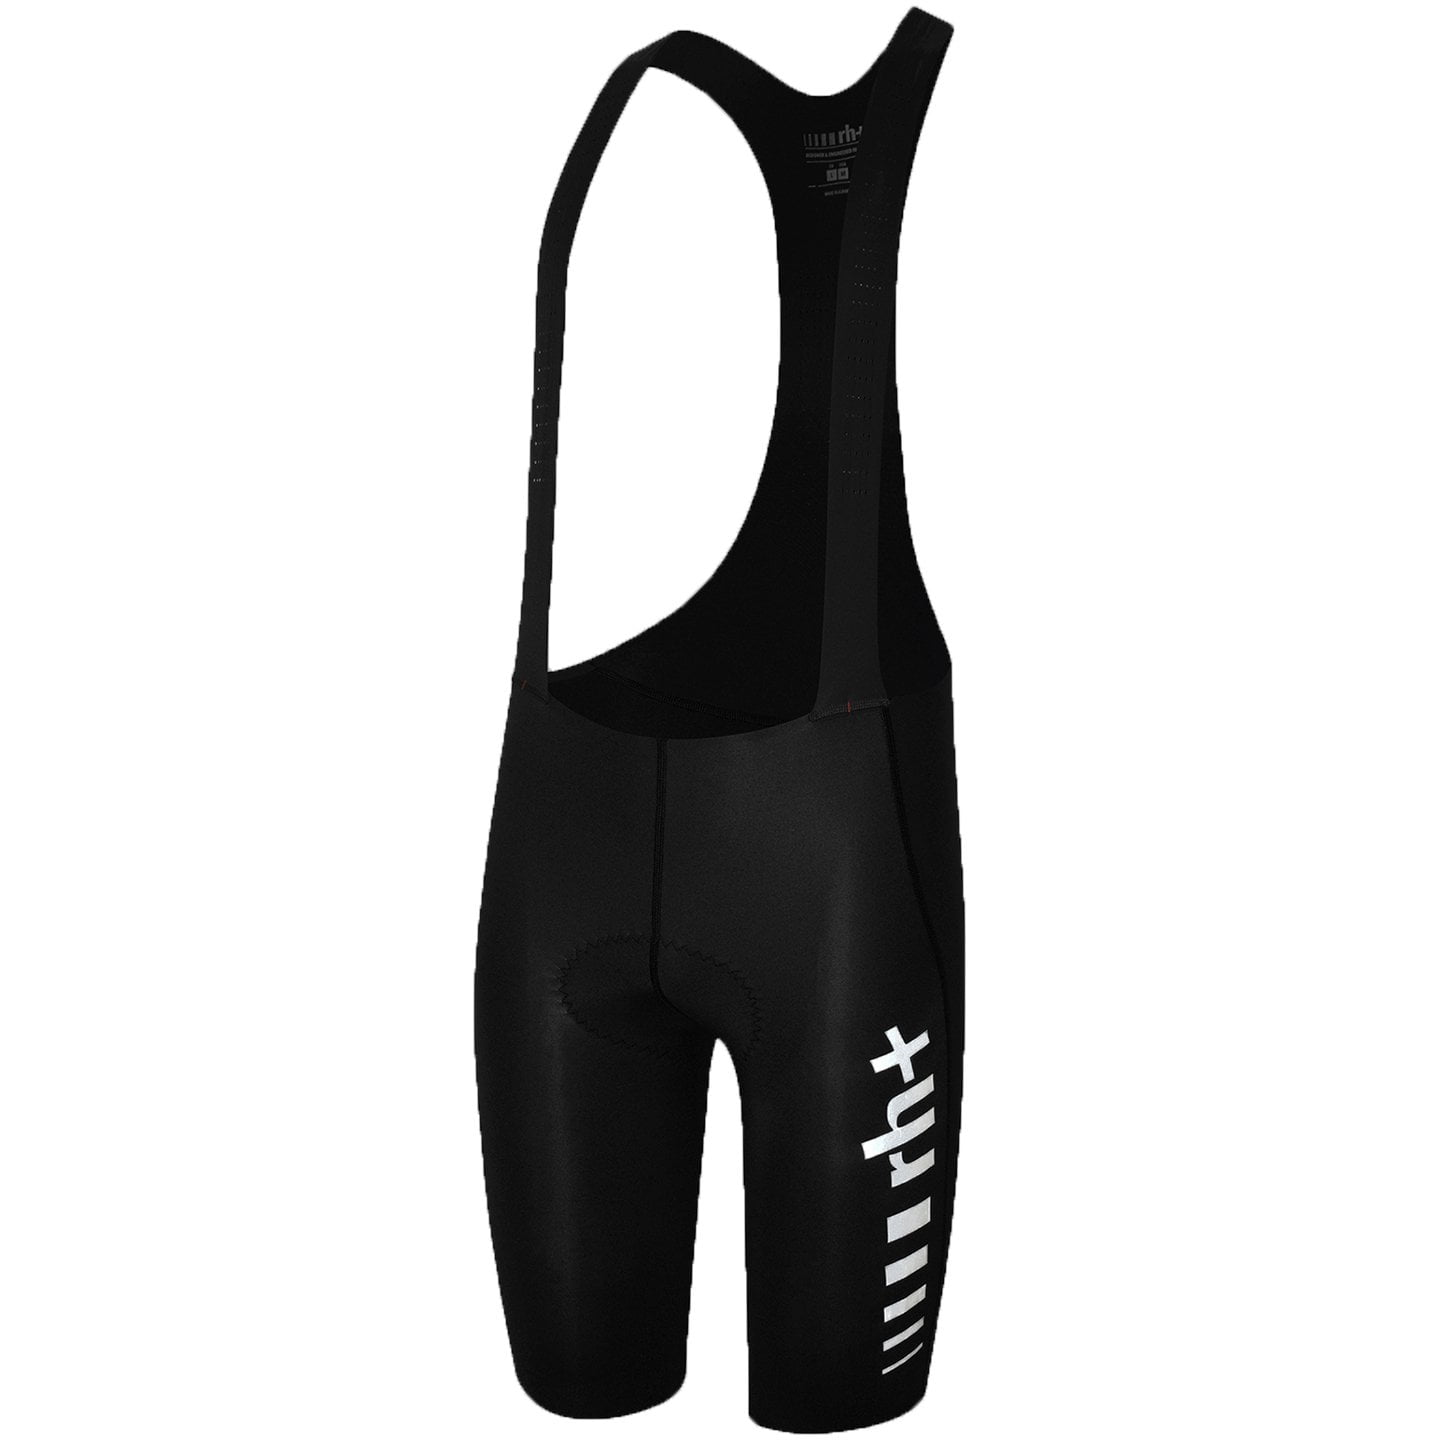 RH+ Code Bib Shorts, for men, size L, Cycle shorts, Cycling clothing